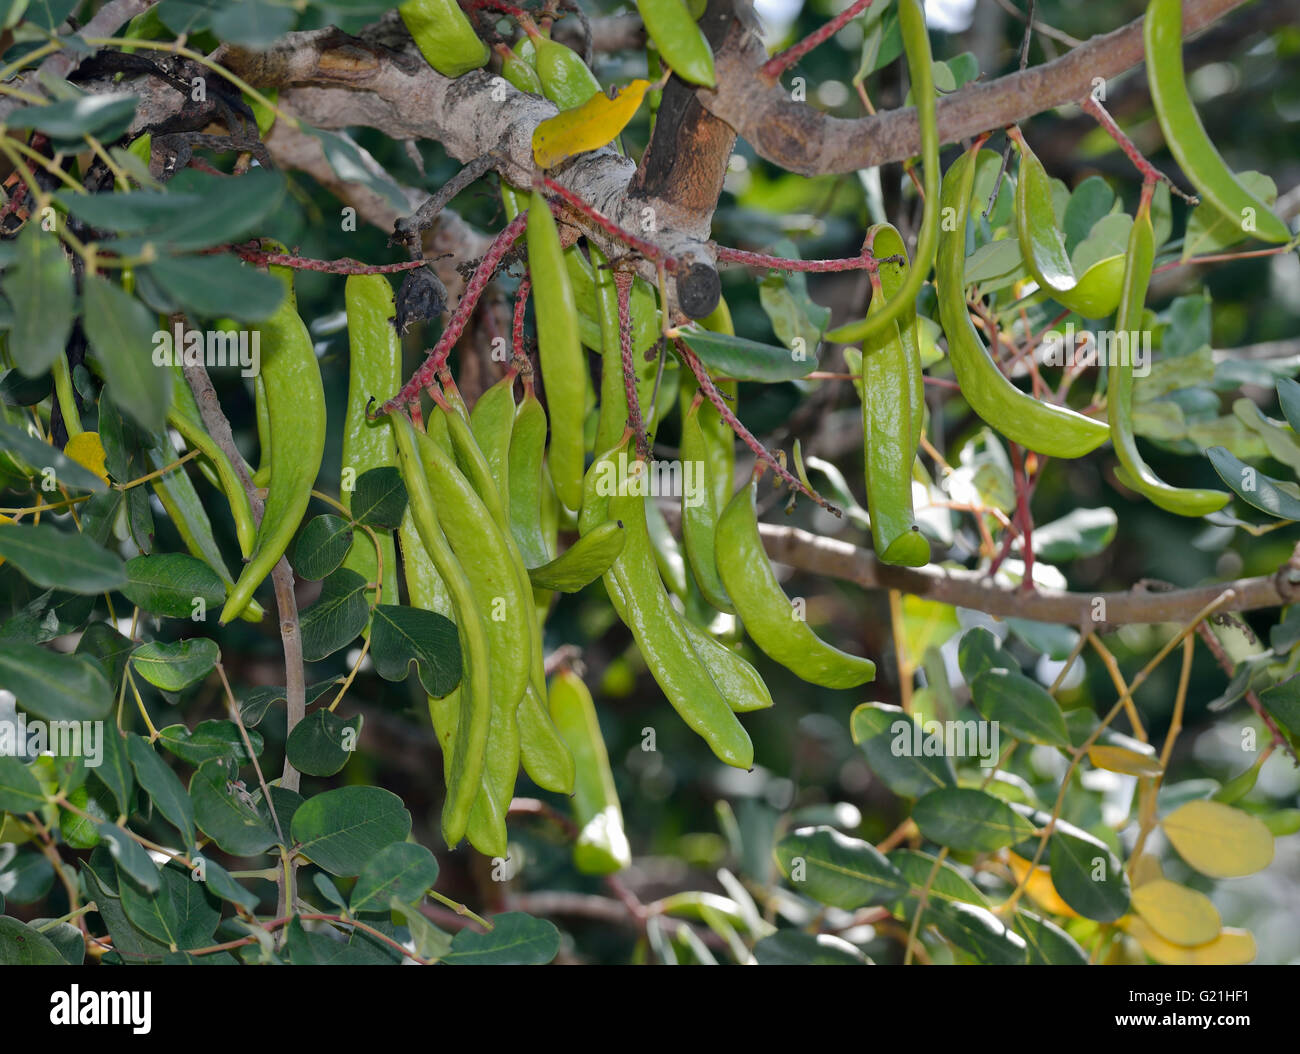 Carob or Locust Tree - Ceratonia siliqua Green Seed Pods on Tree Stock Photo